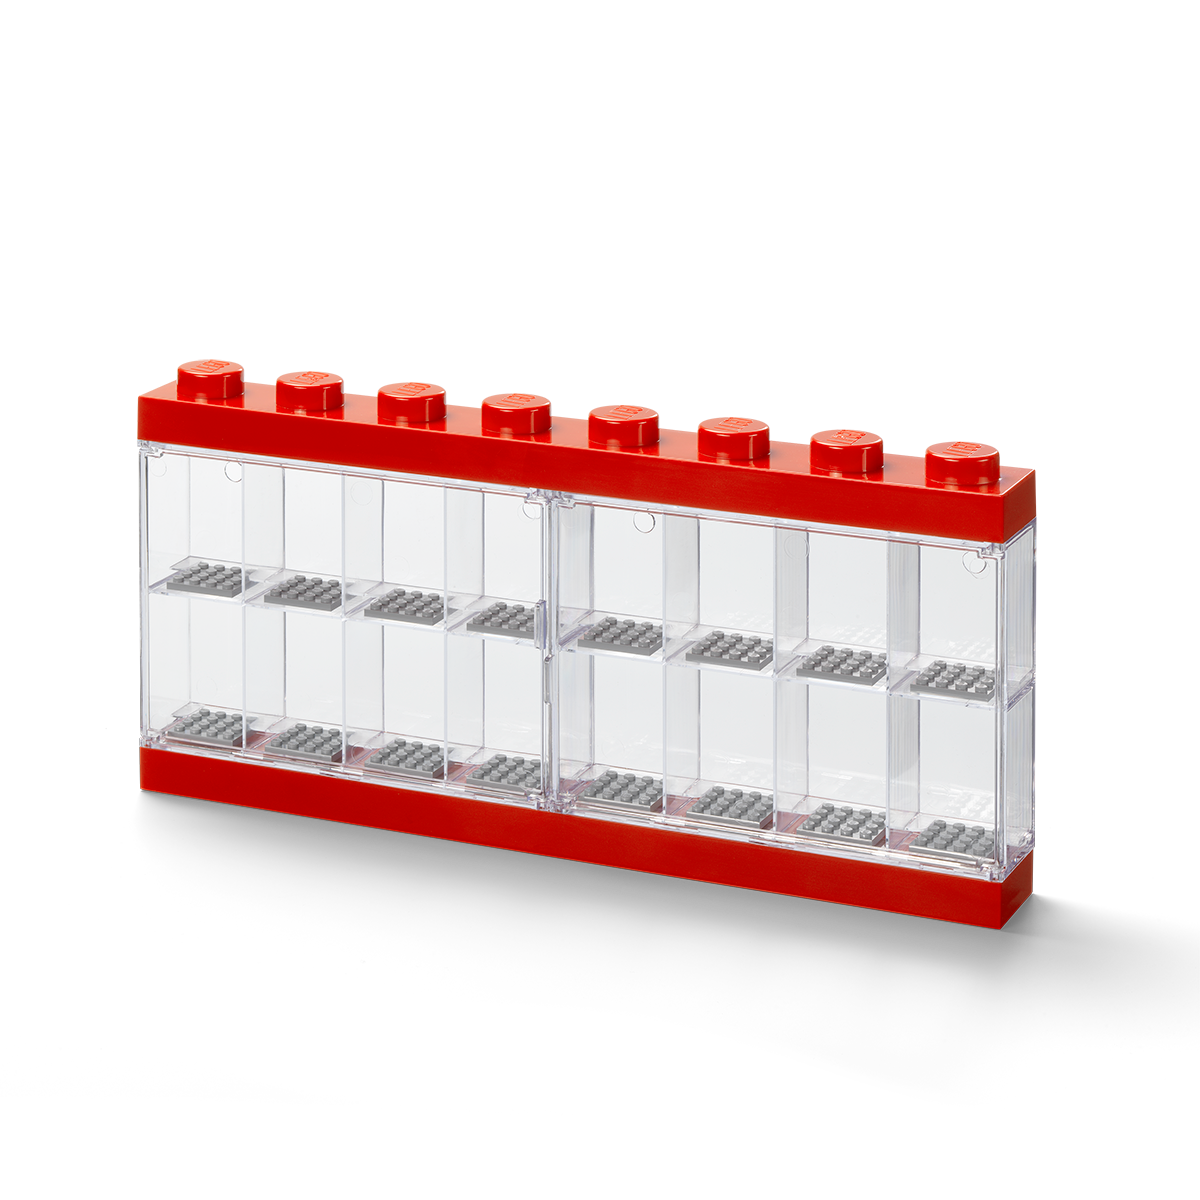 Razstavna škatla 16 minifigur - Rdeča